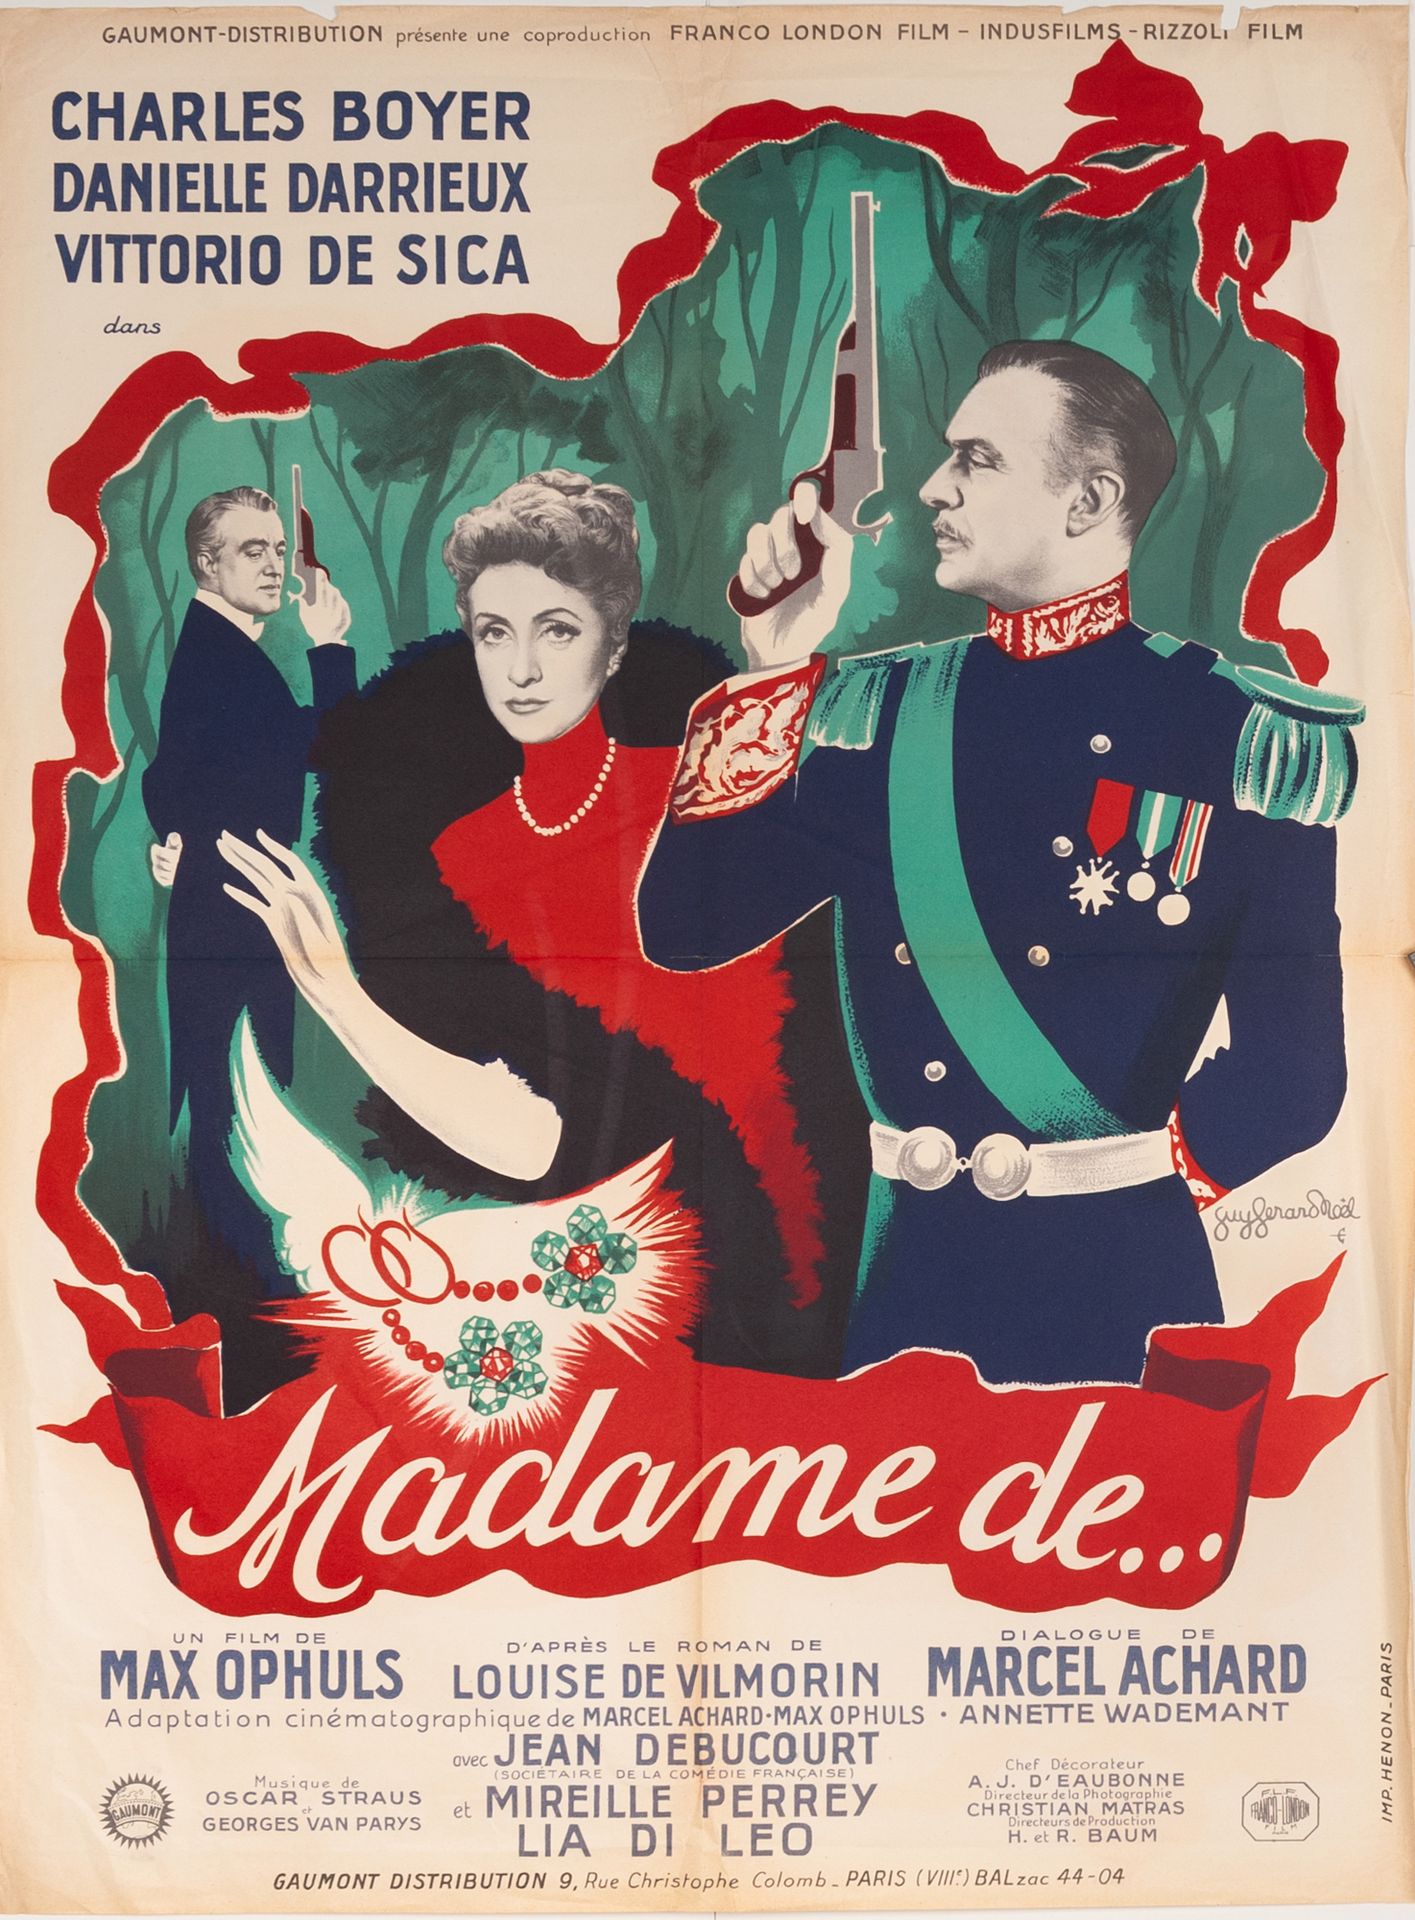 Null 夫人德...
Max Ophüls.1953年。
60 x 80厘米。法国海报。盖-热拉尔-诺埃尔英普尔-赫农。巴黎
折叠的。条件B